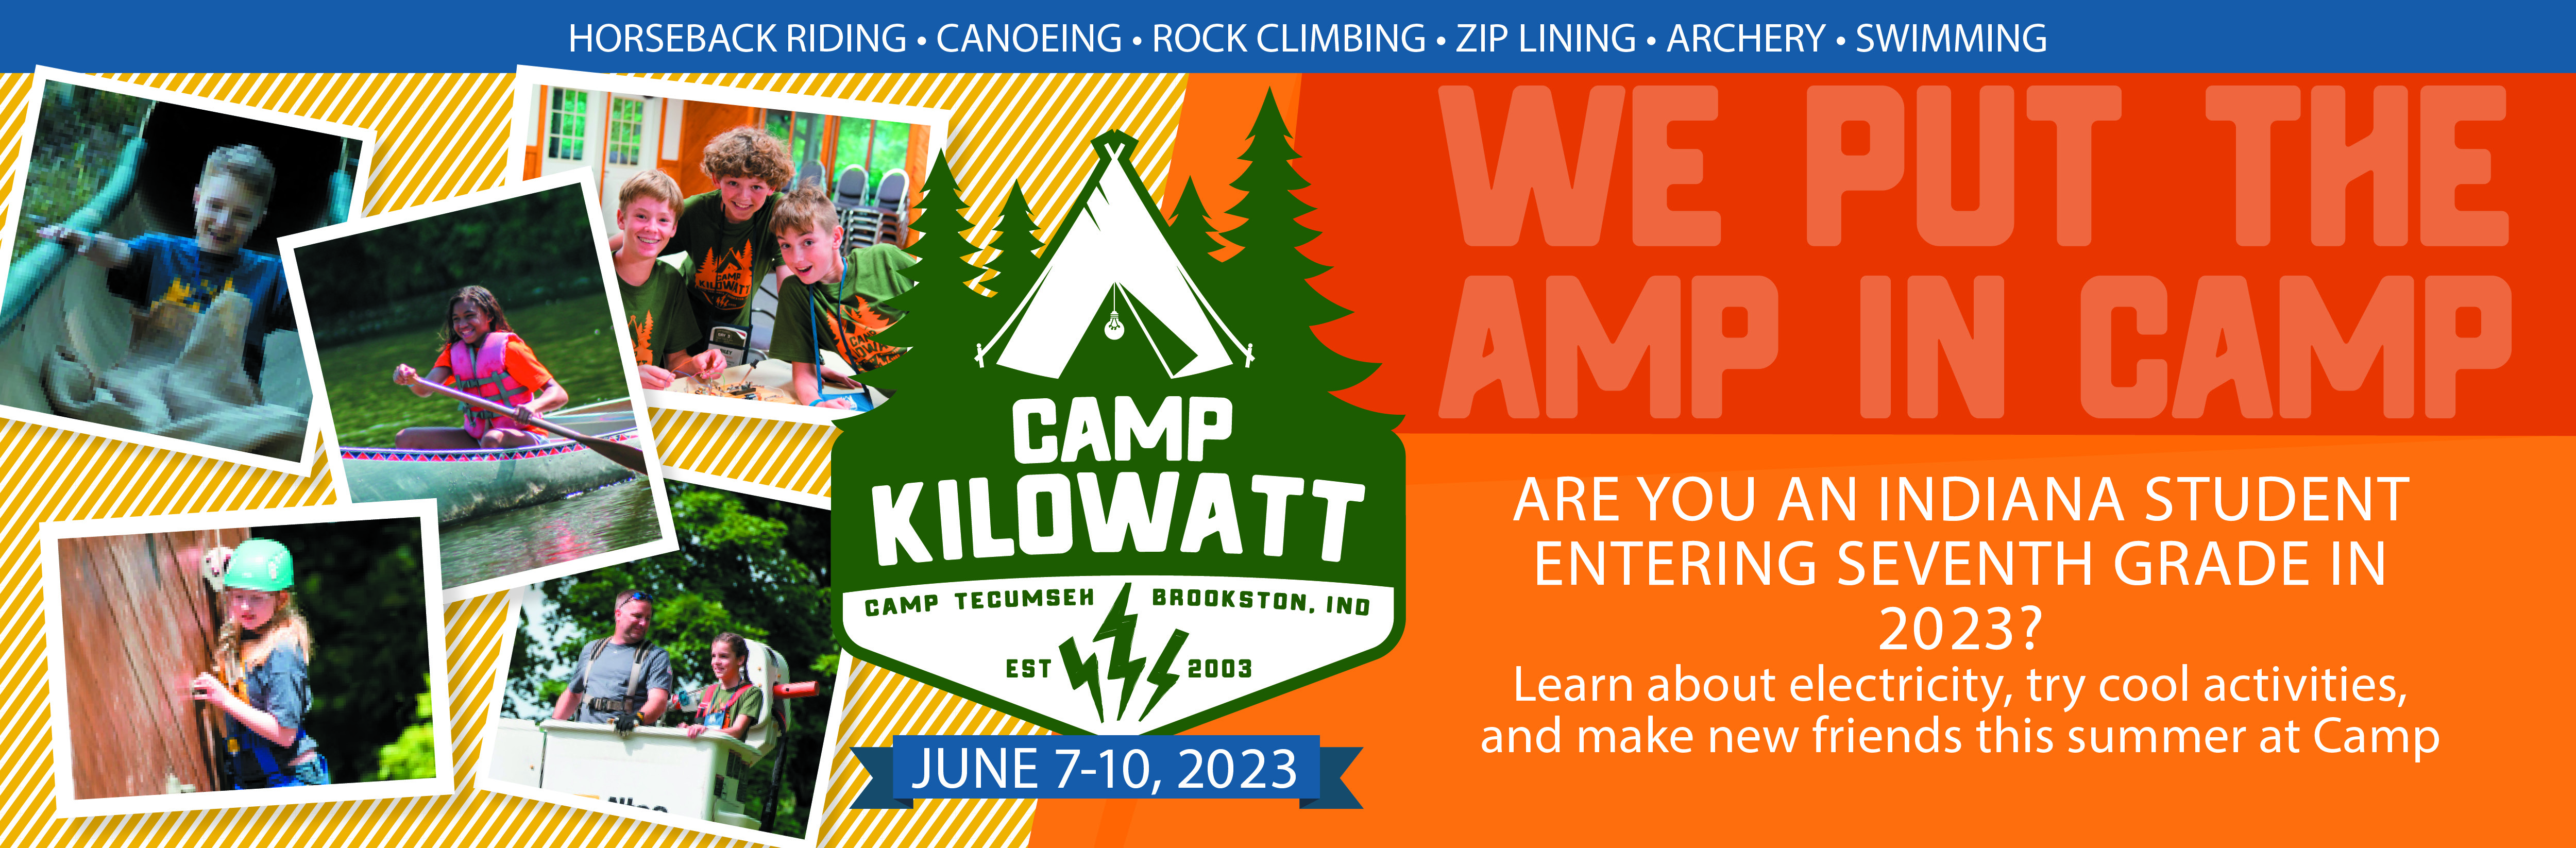 Camp Kilowatt Web Banner Advertisement